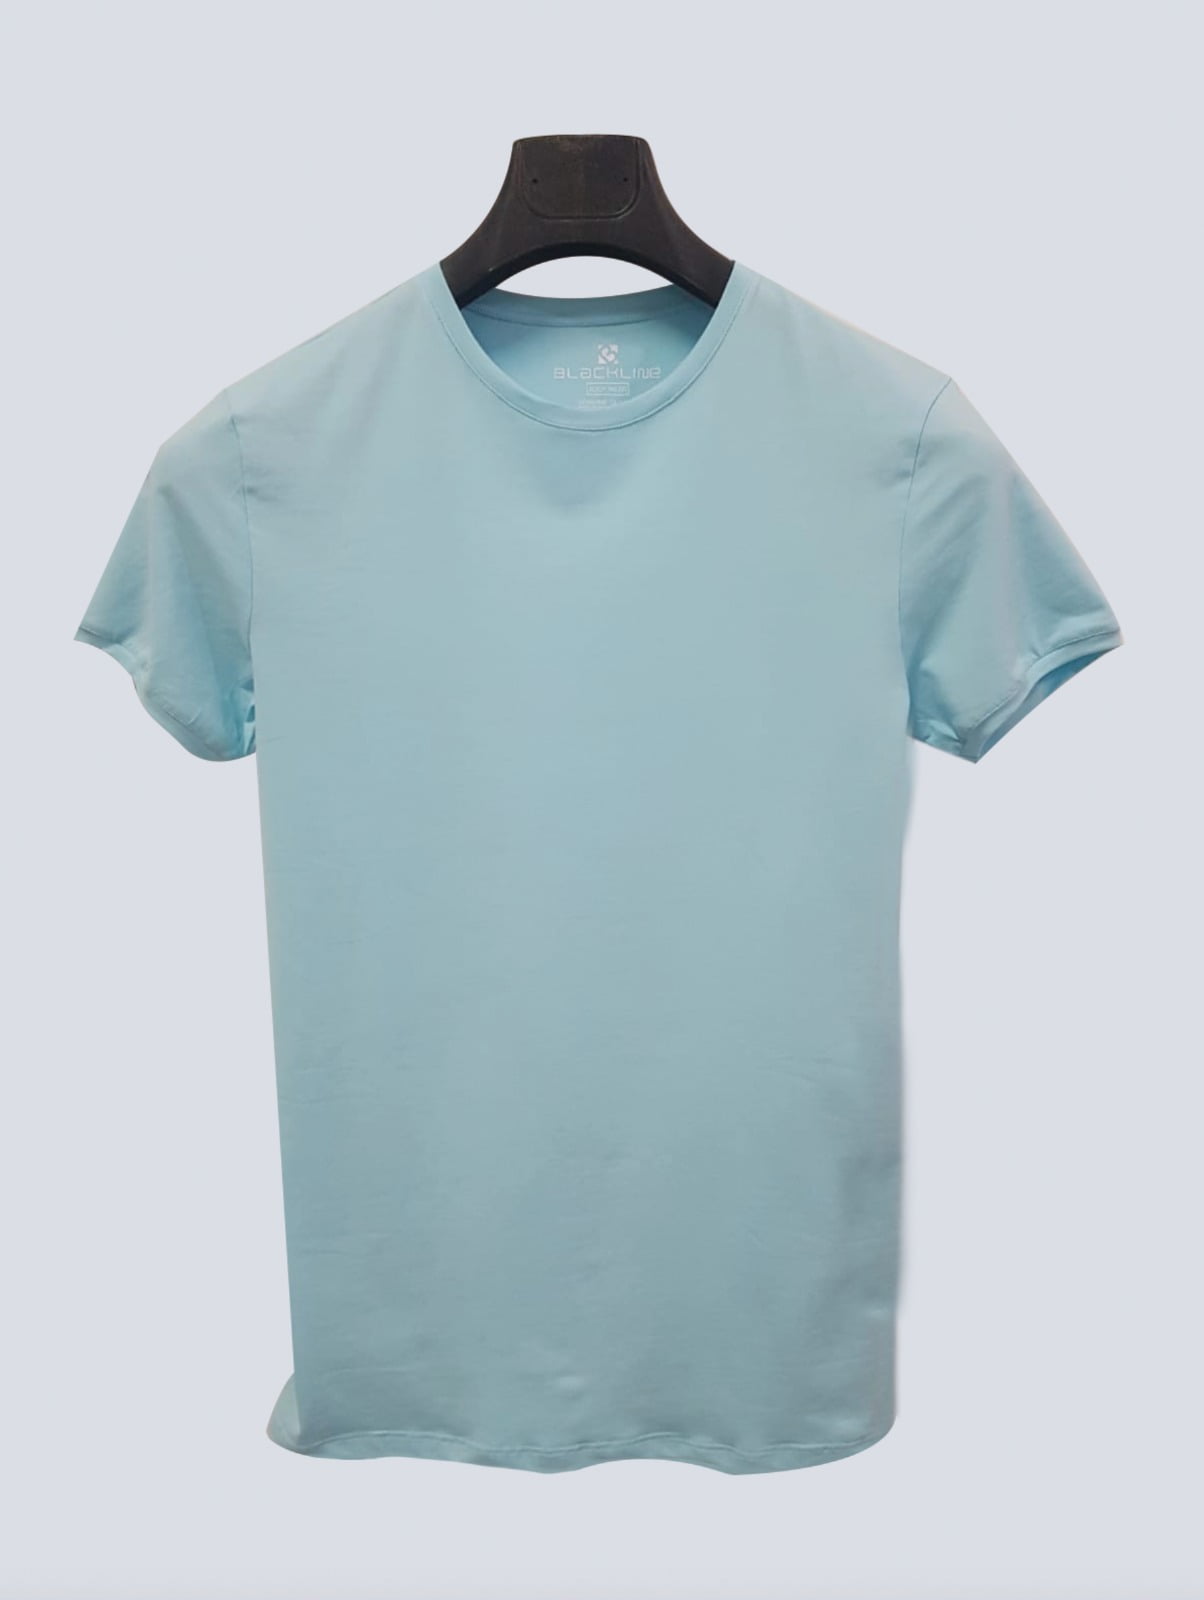 T-Shirt Body Round Neck Short Sleeve - Cyan Blue - Black Line